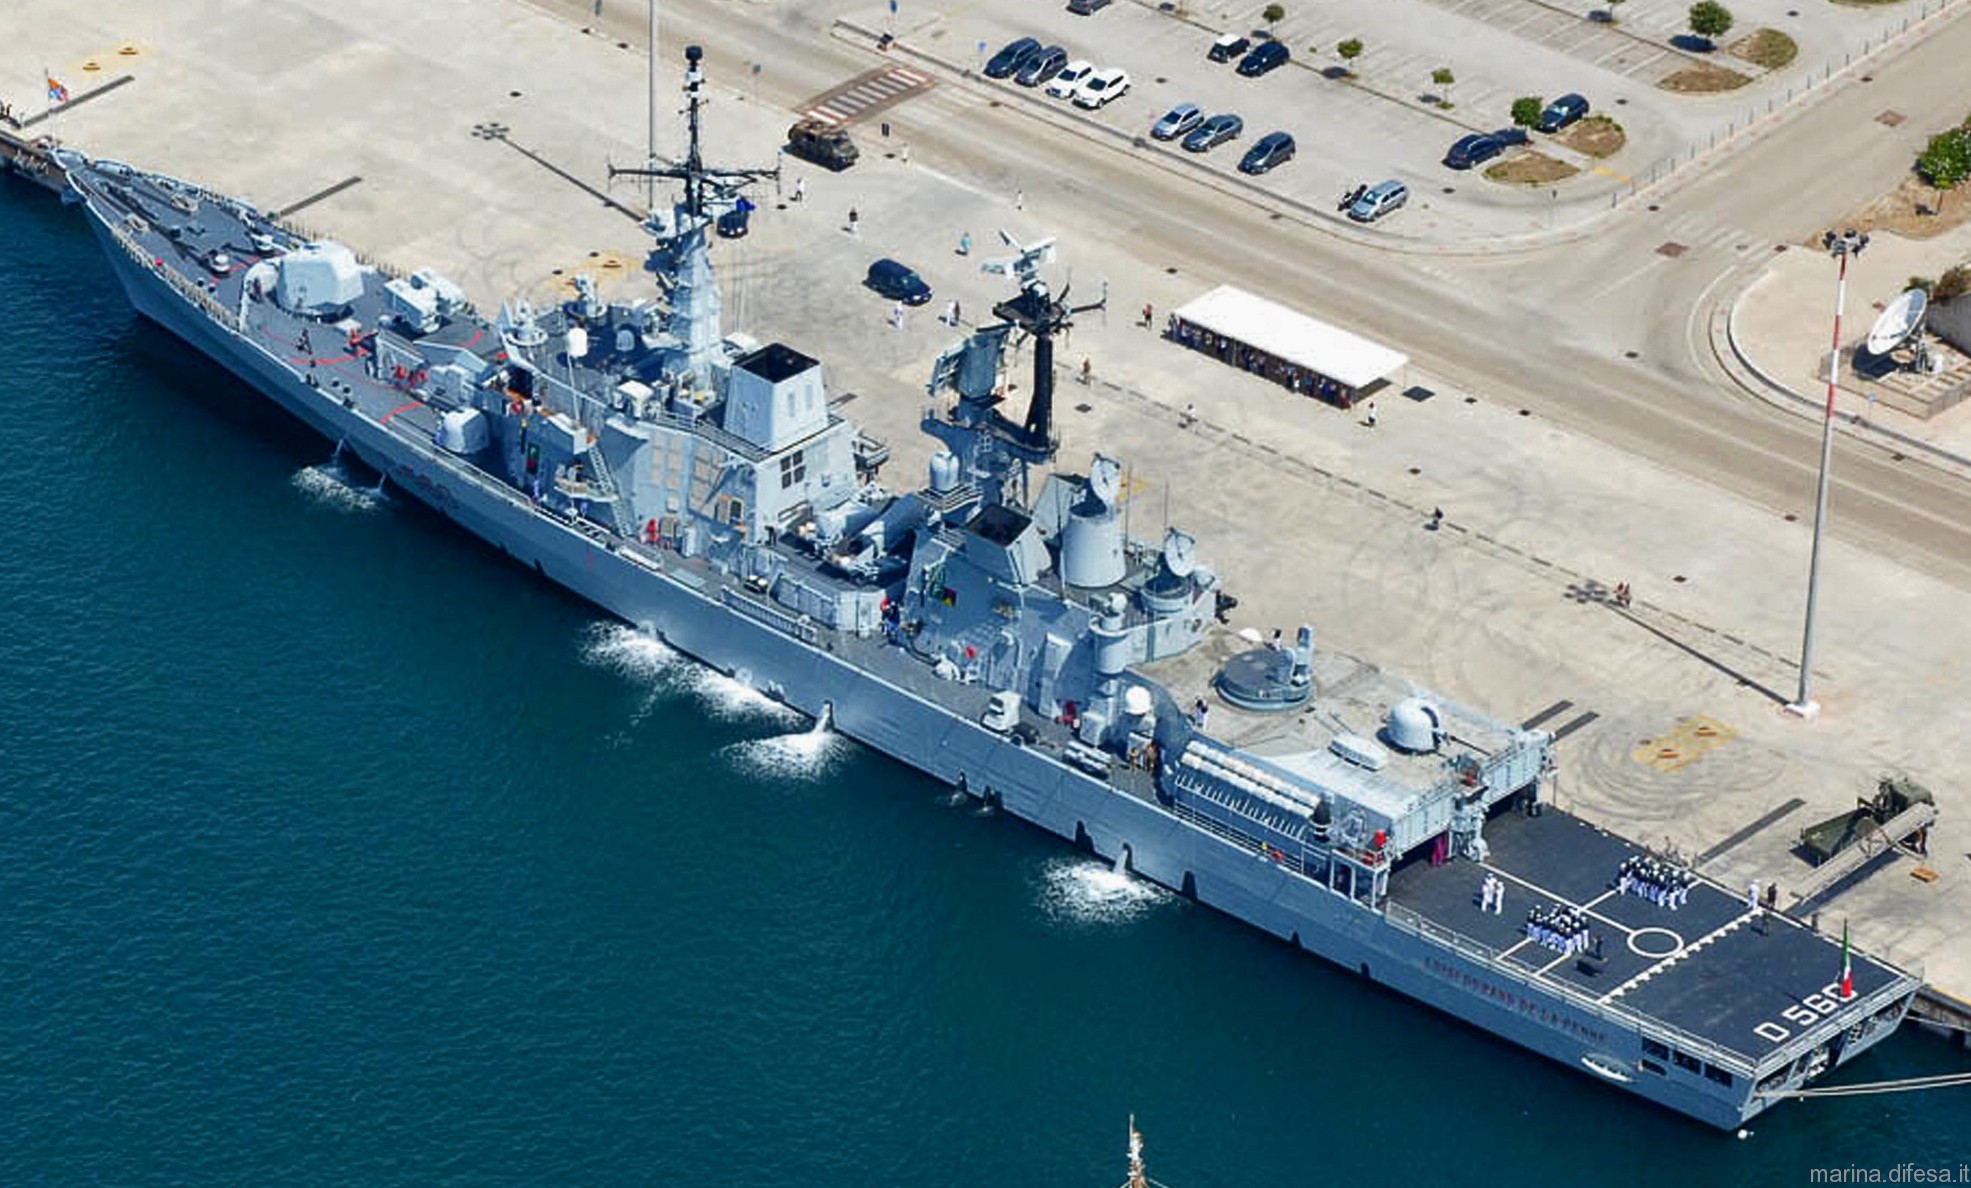 d-560 luigi durand de la penne its nave guided missile destroyer ddg italian navy marina militare 29 taranto